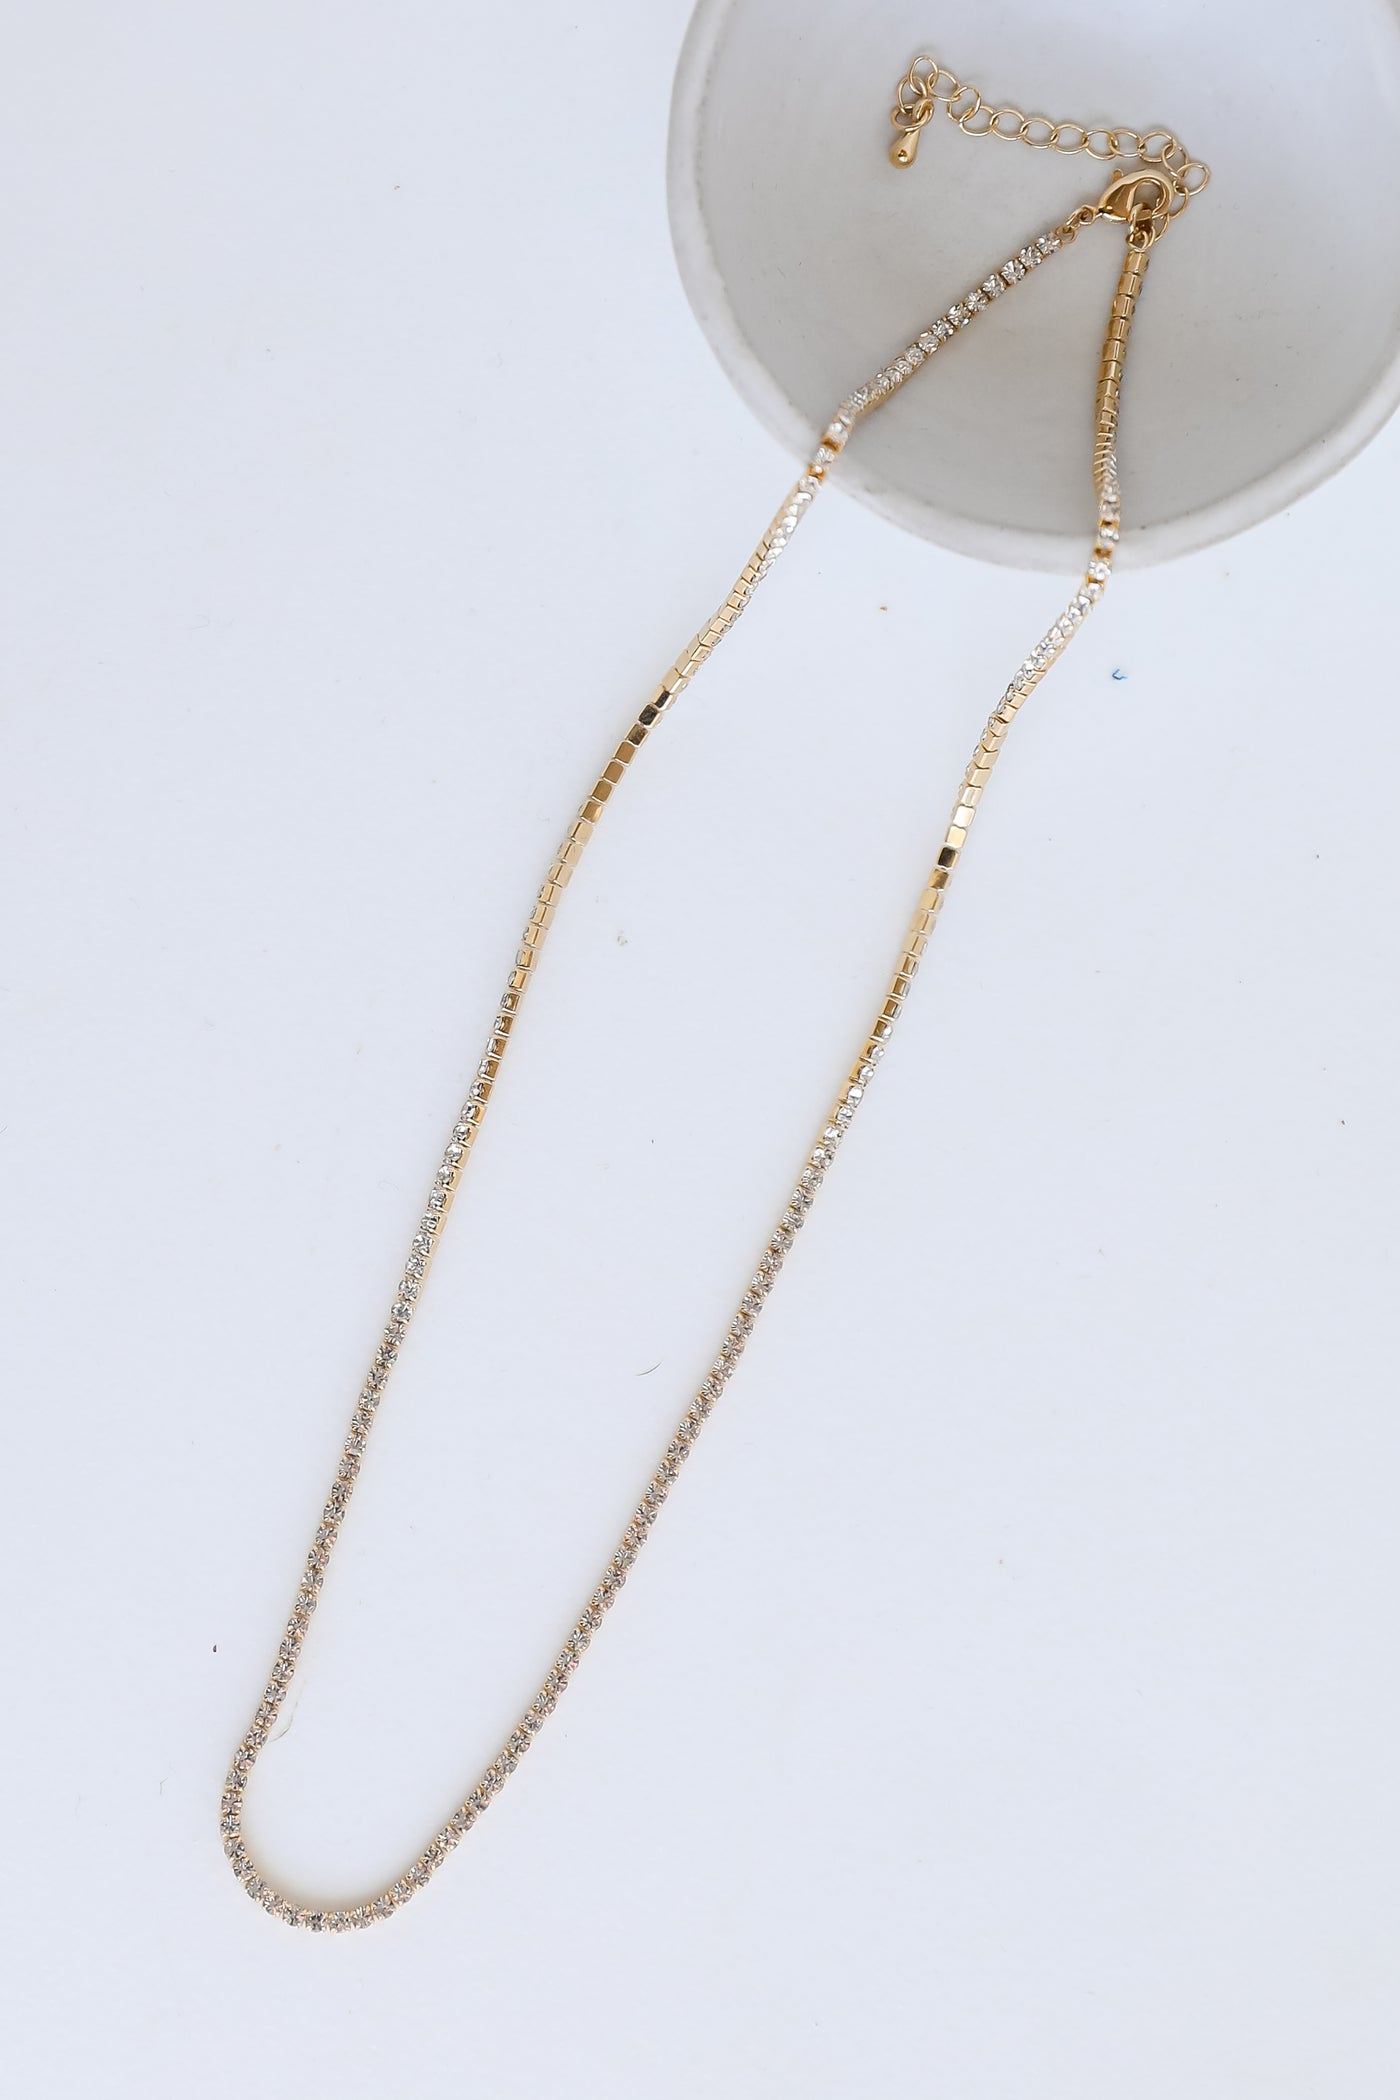 Gold Rhinestone Necklace close up